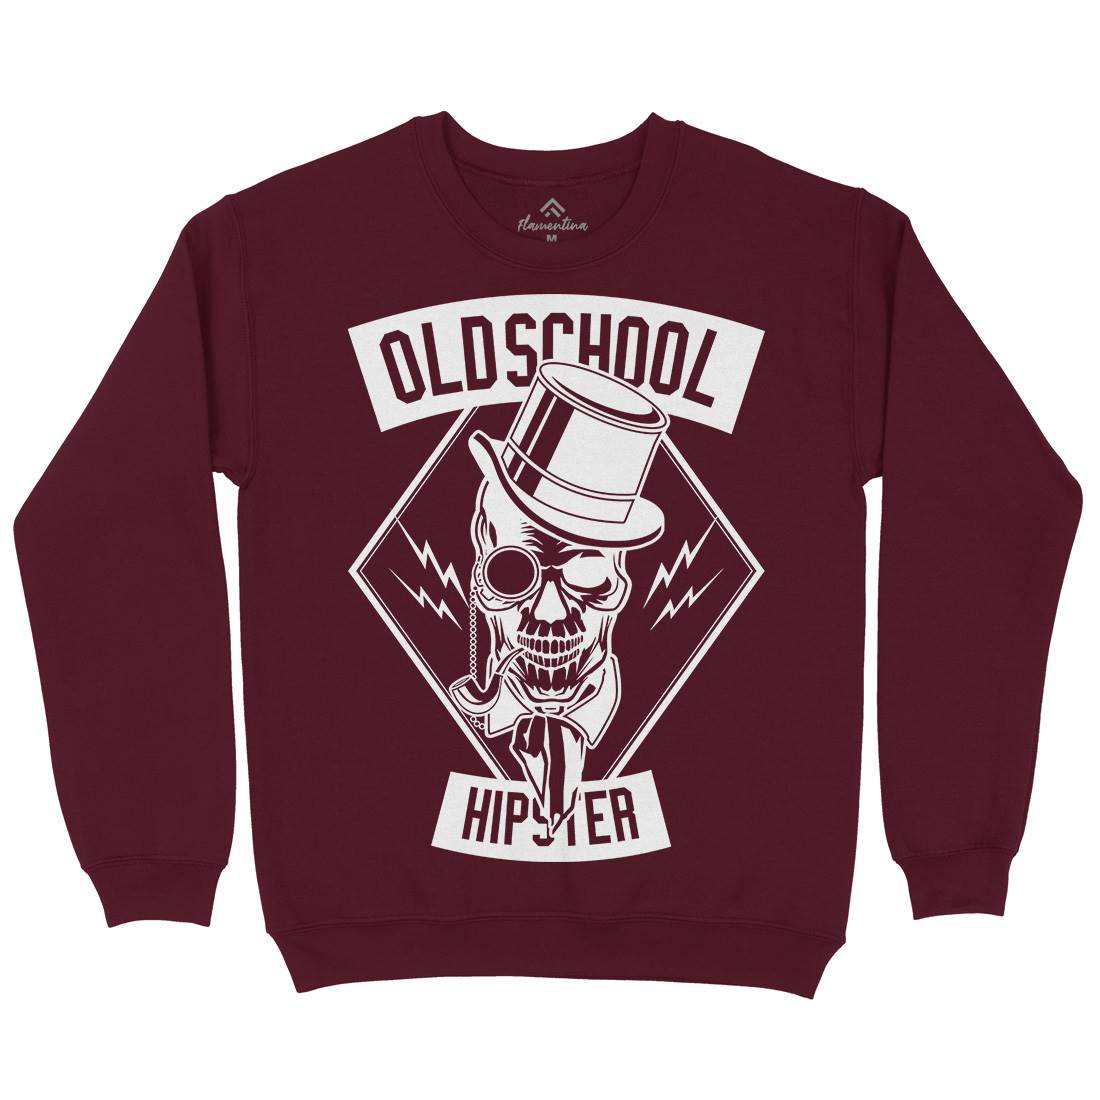 Old School Hipster Mens Crew Neck Sweatshirt Retro B592